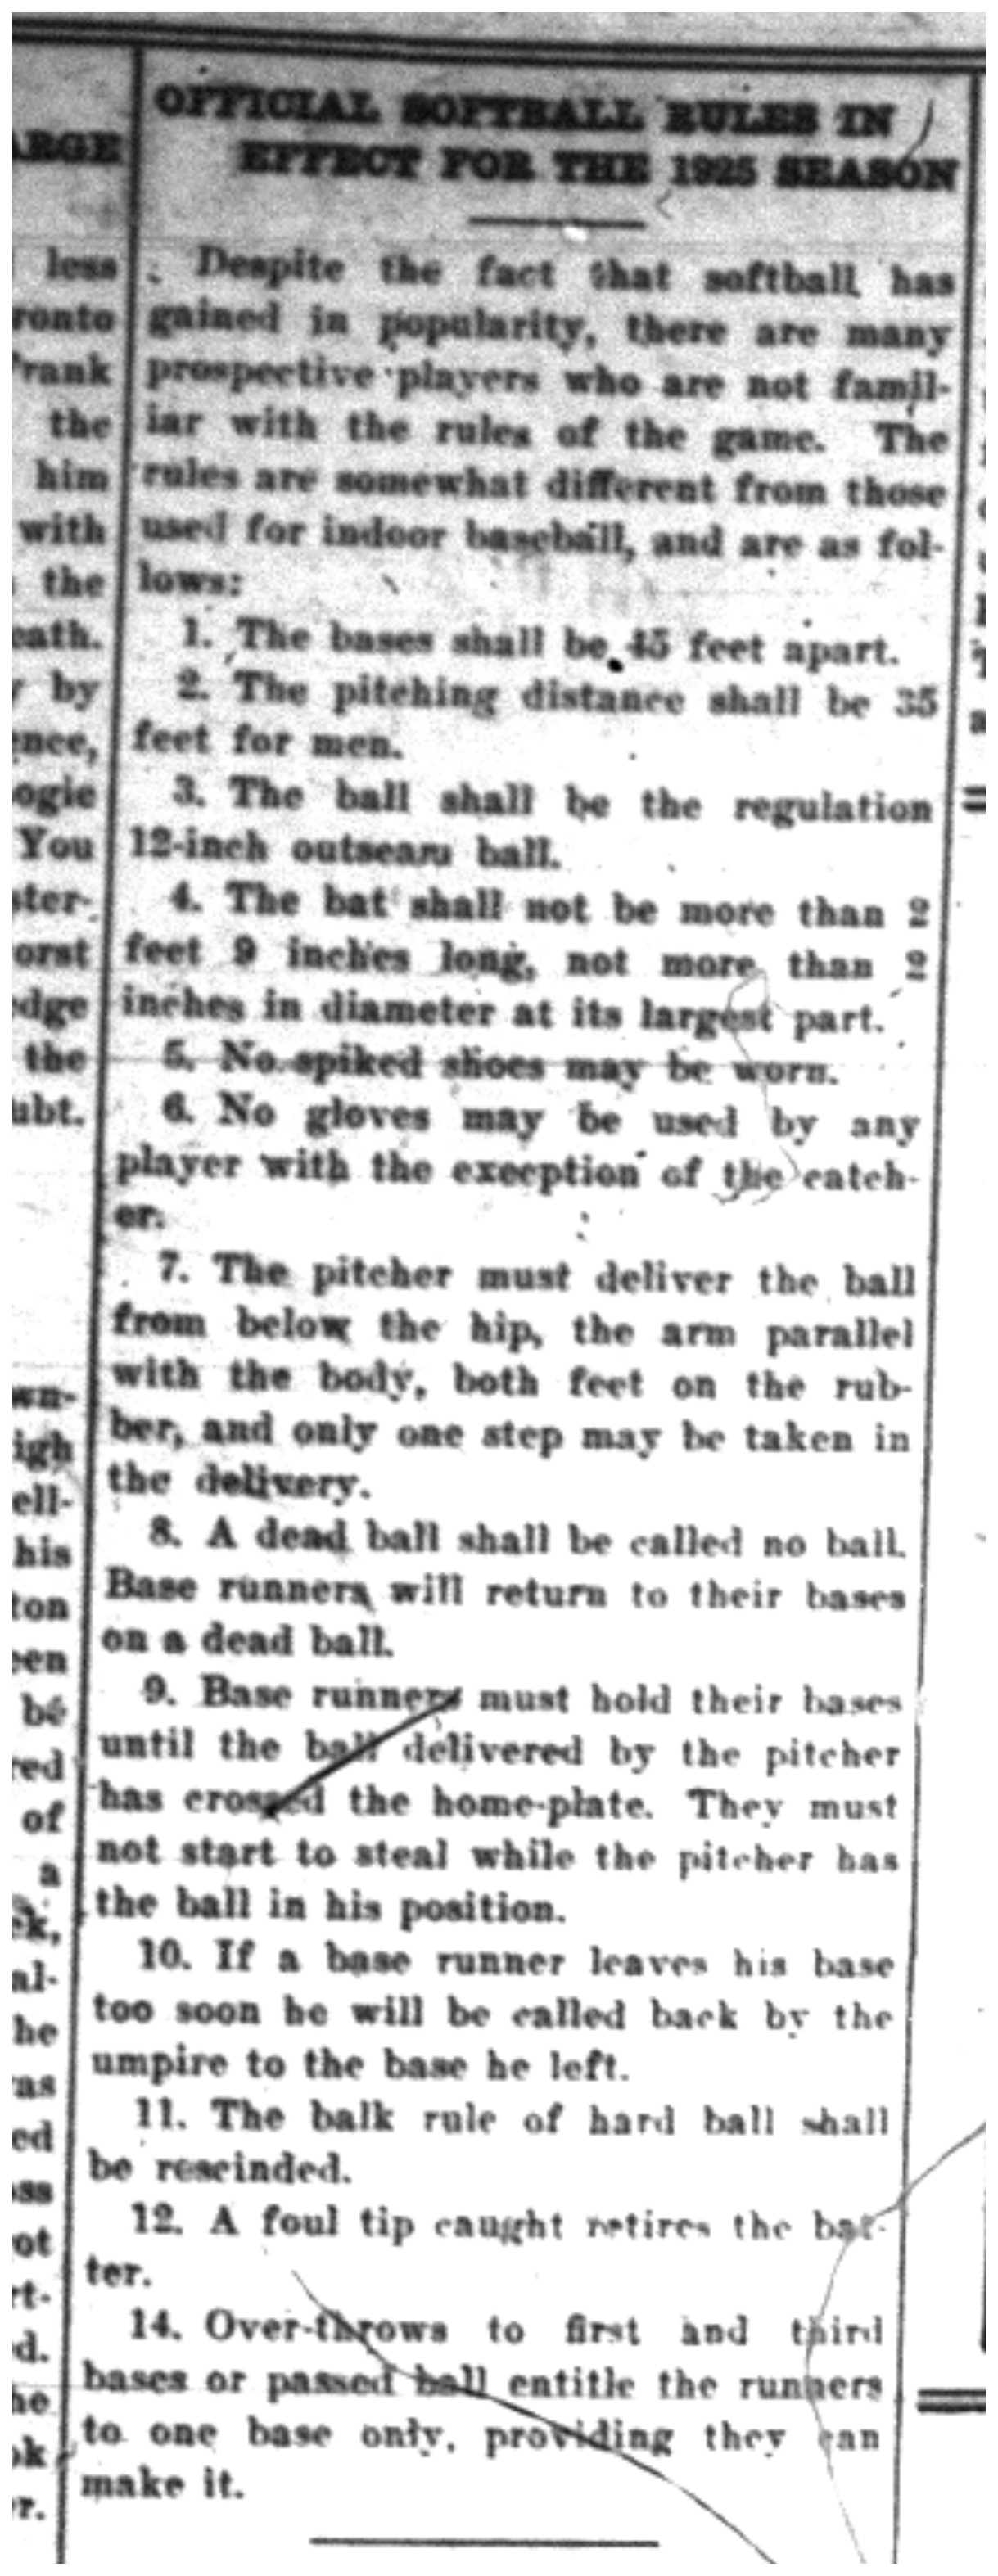 1925-05-07 Softball -Rules